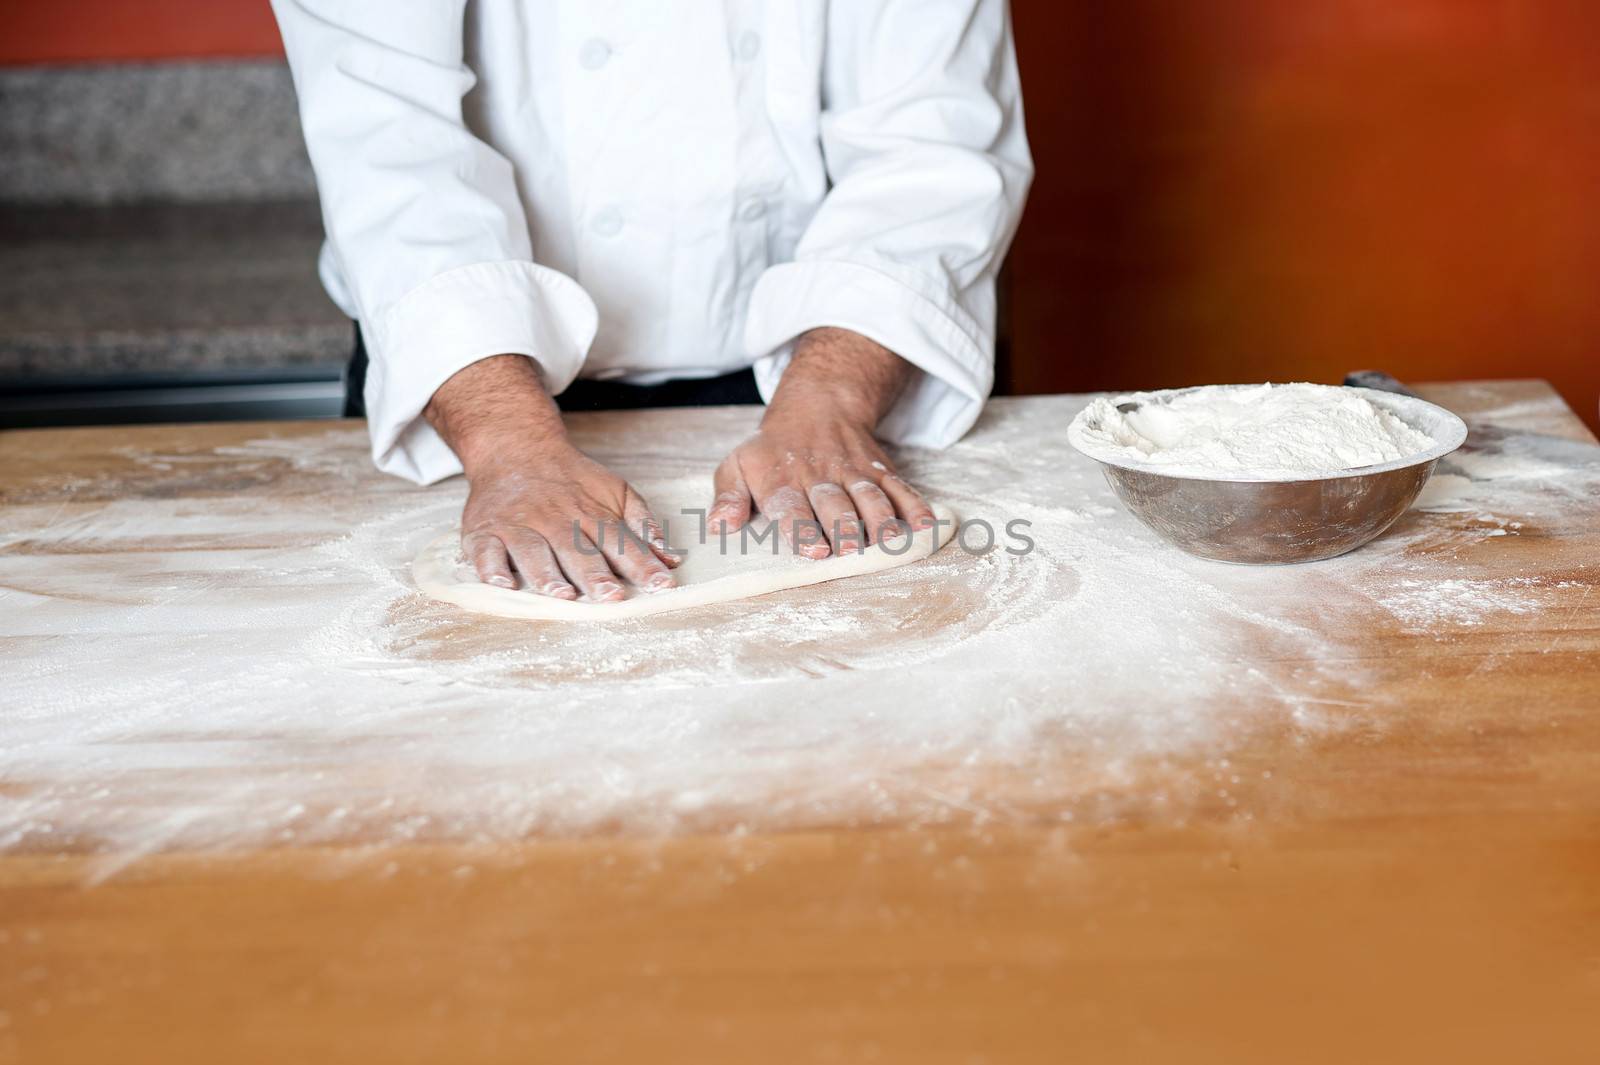 Baker preparing pizza base